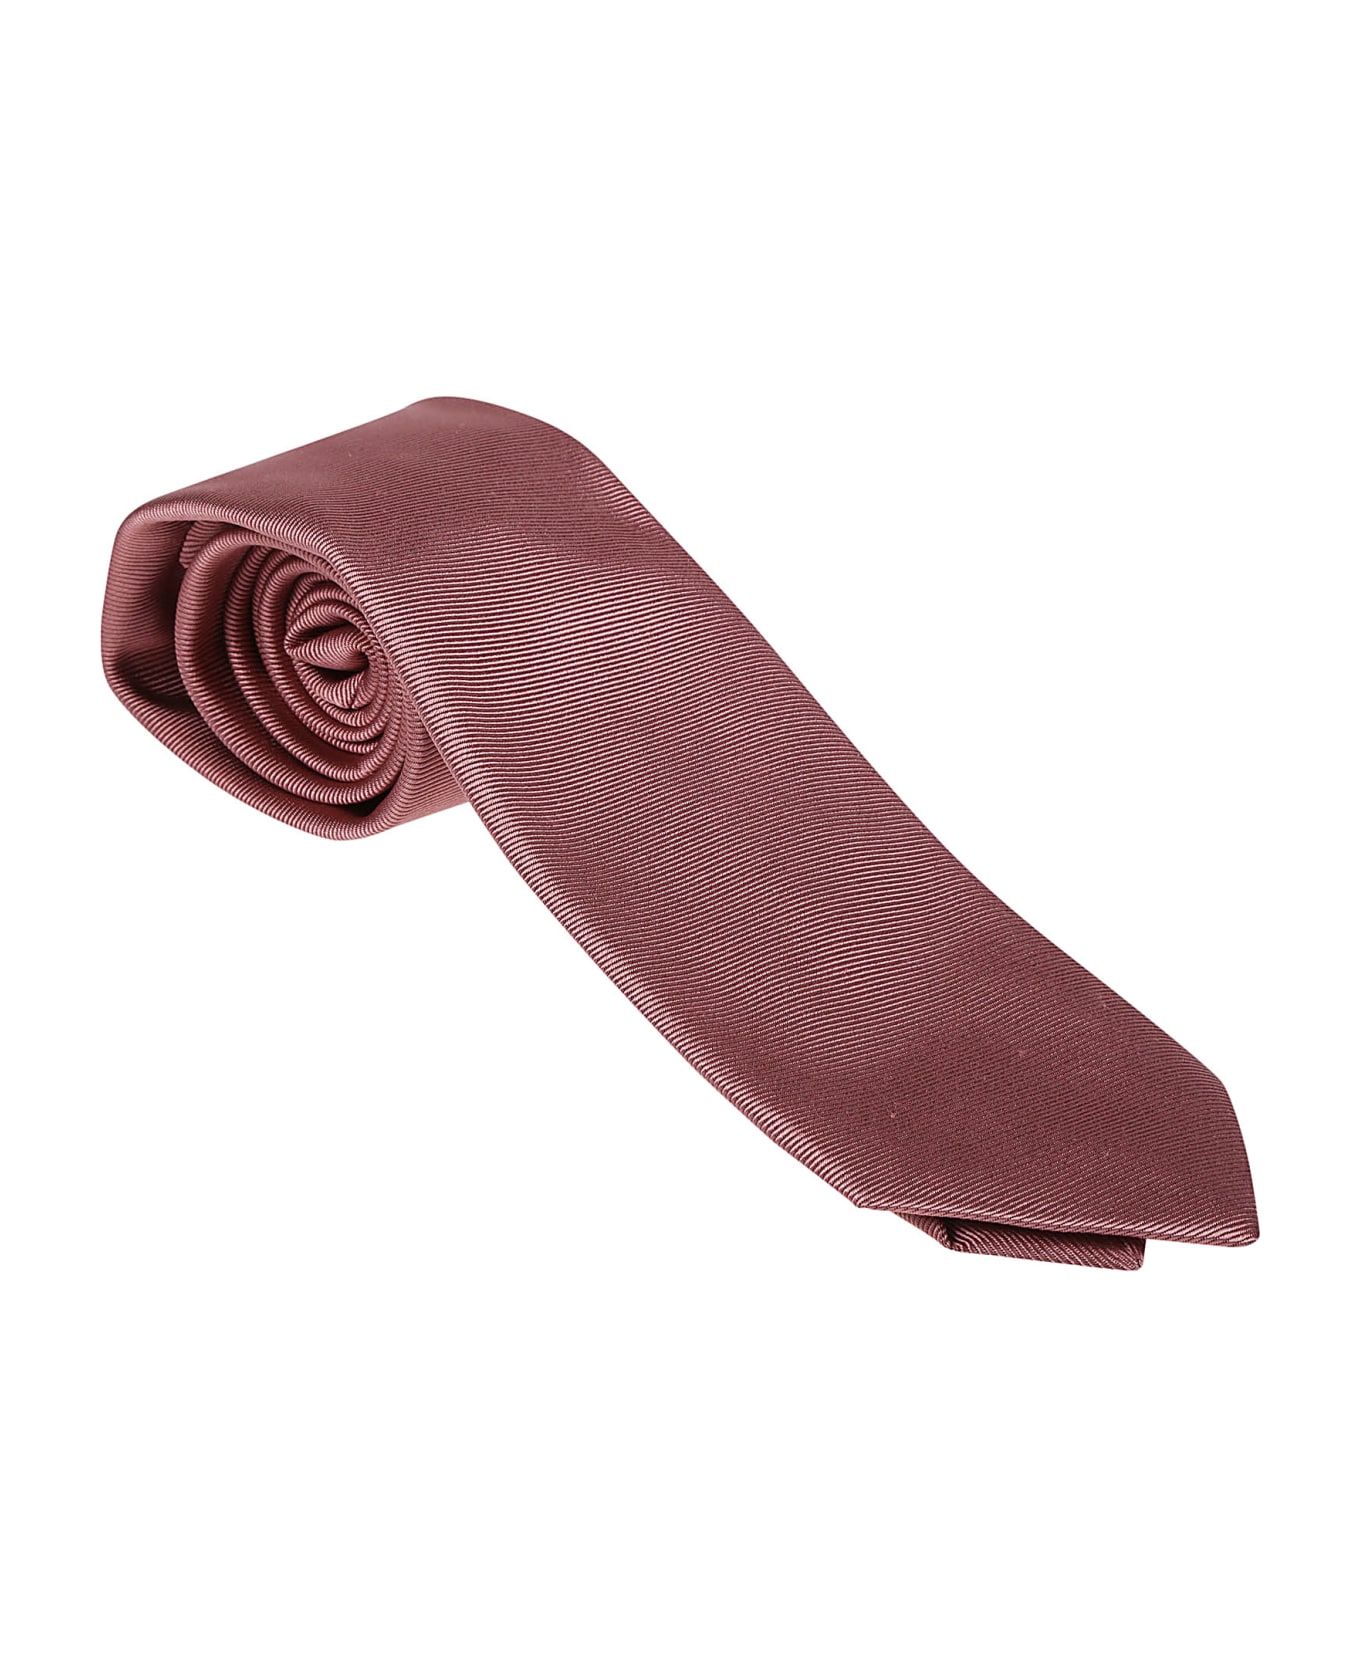 Etro Placed Tie - Rosa ネクタイ